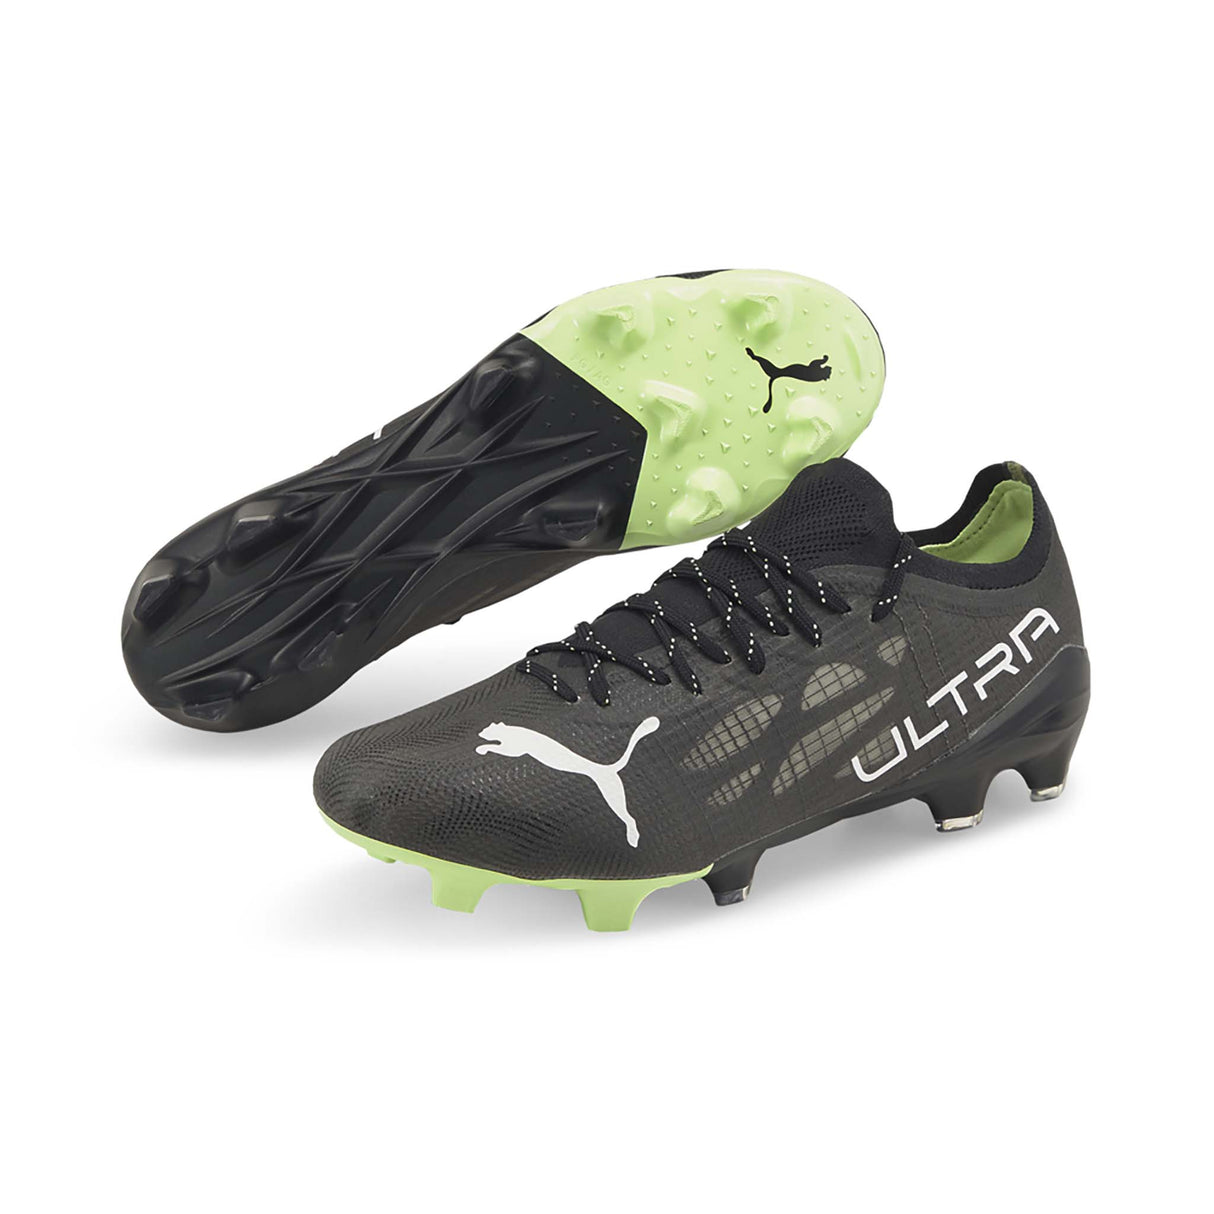 Puma Ultra 1.4 FG/AG chaussures de soccer noir blanc paire